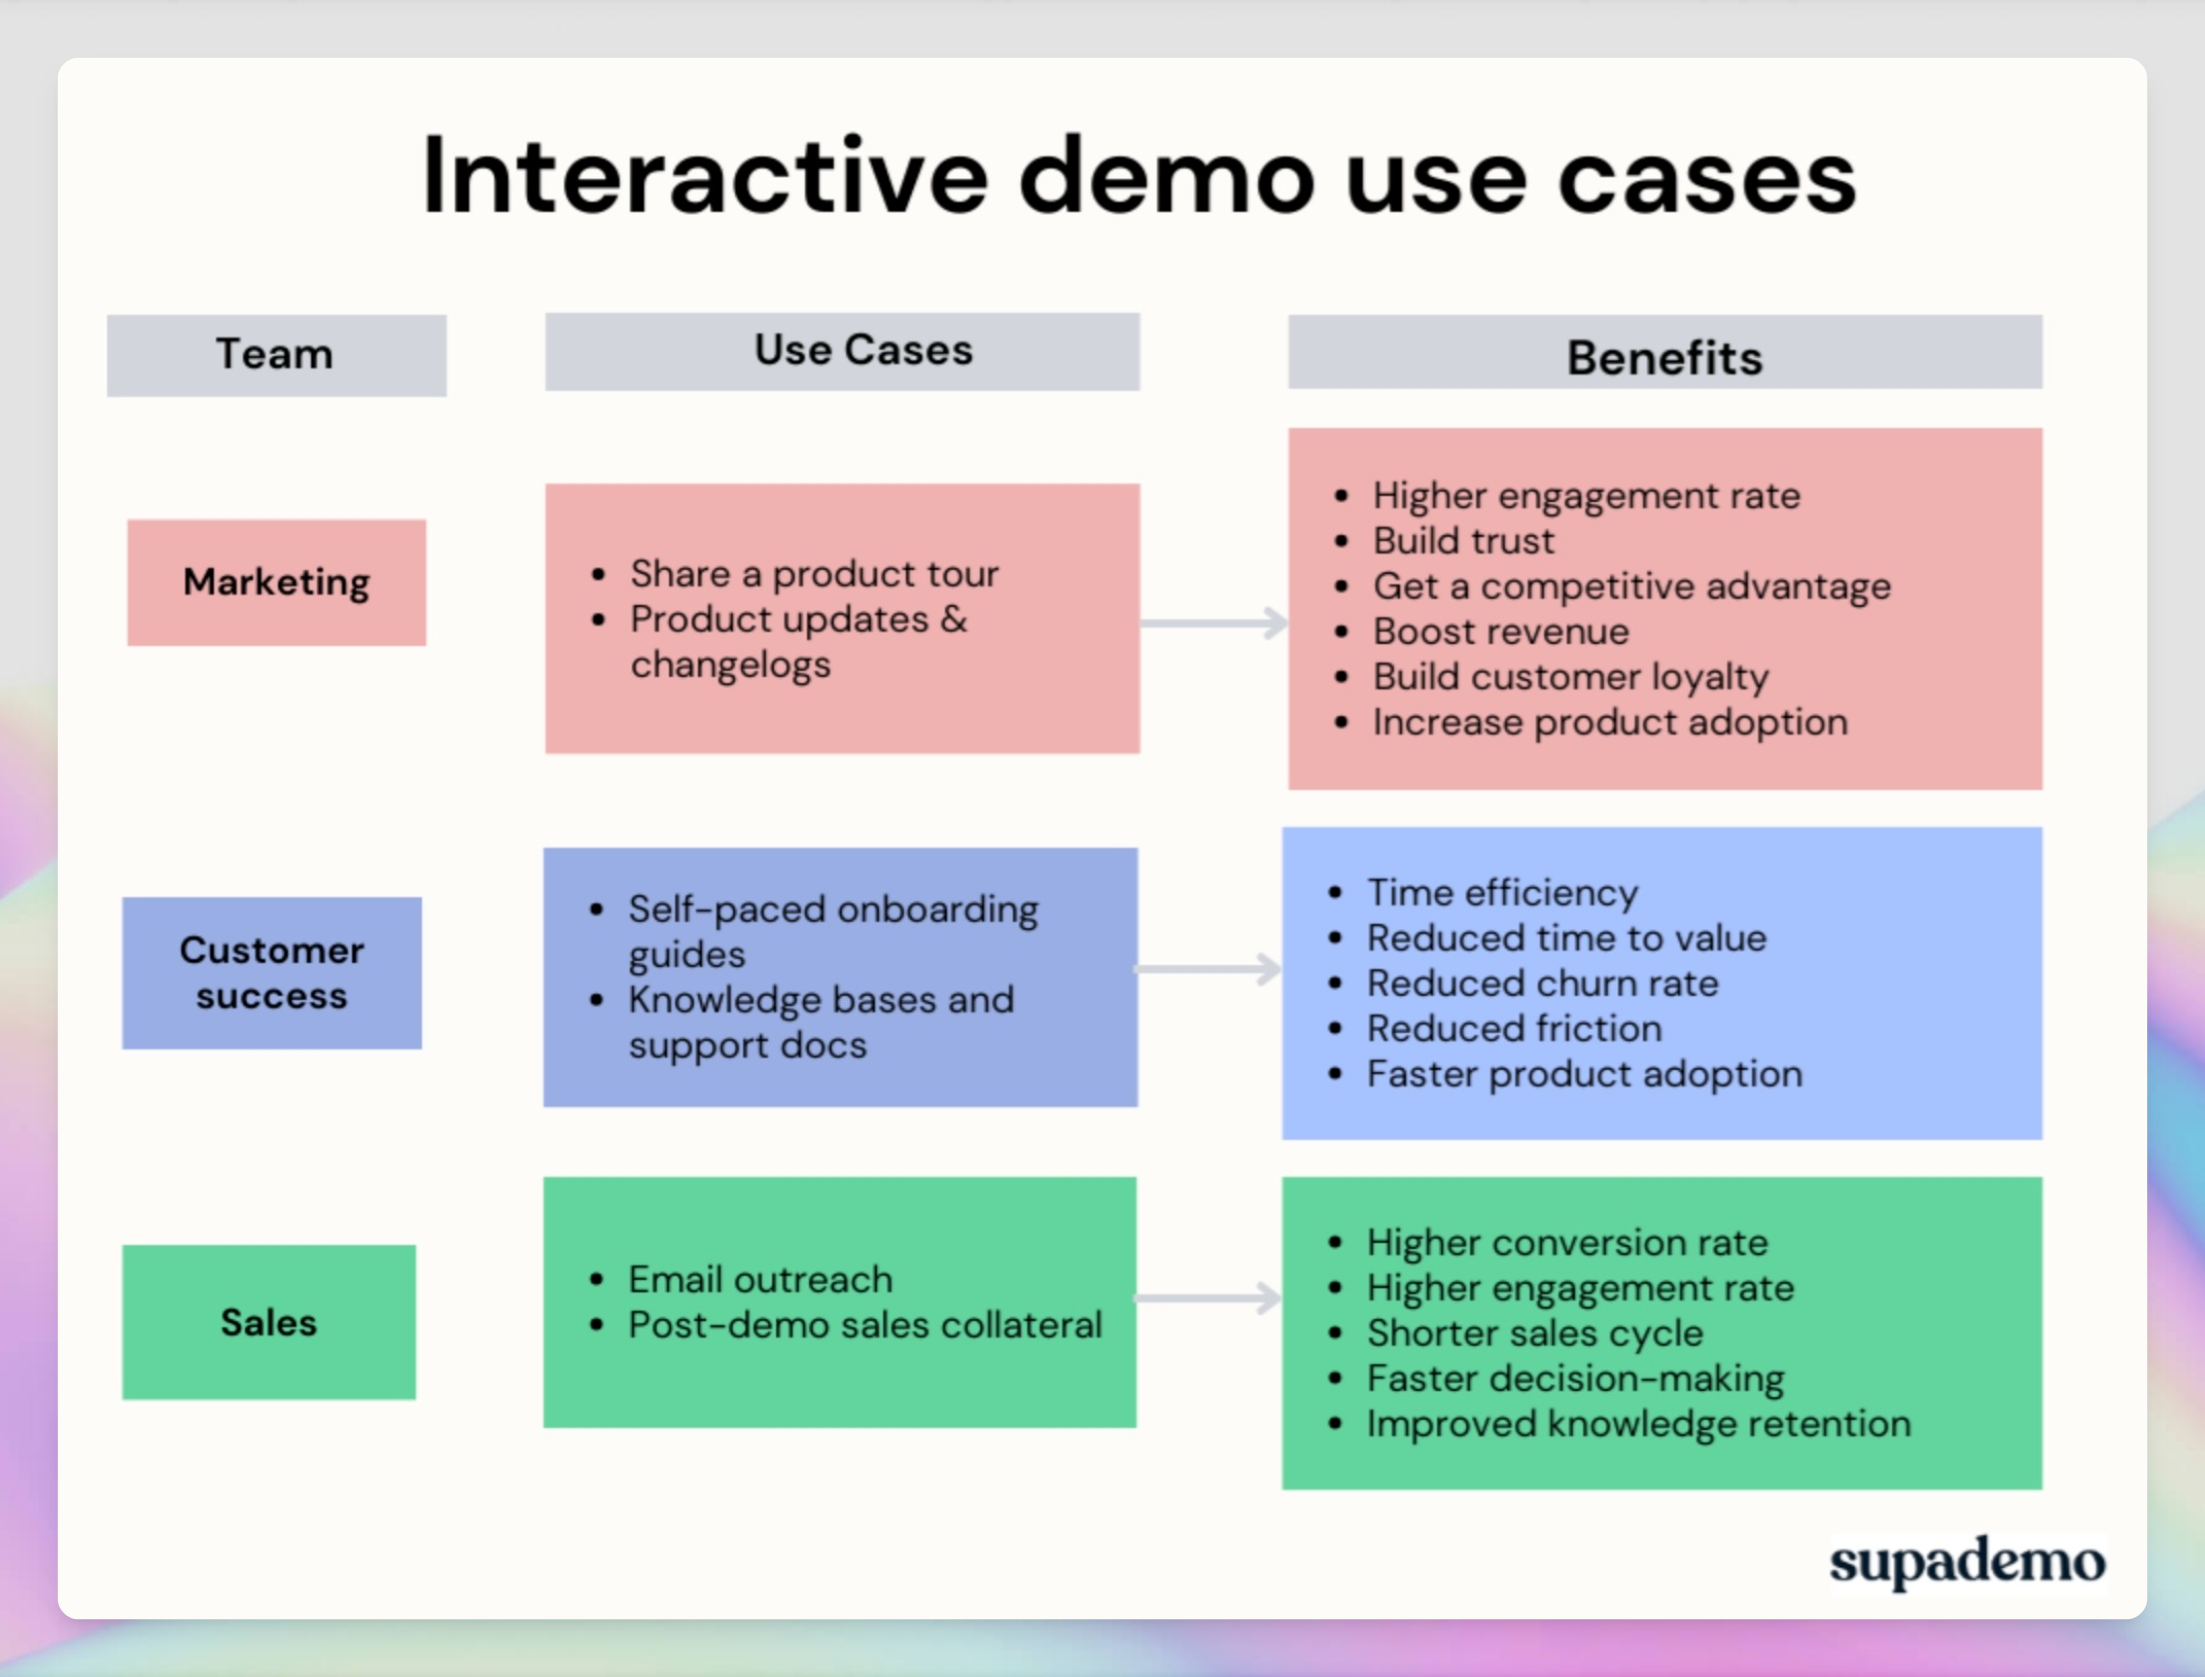 Major benefits of interactive product demos